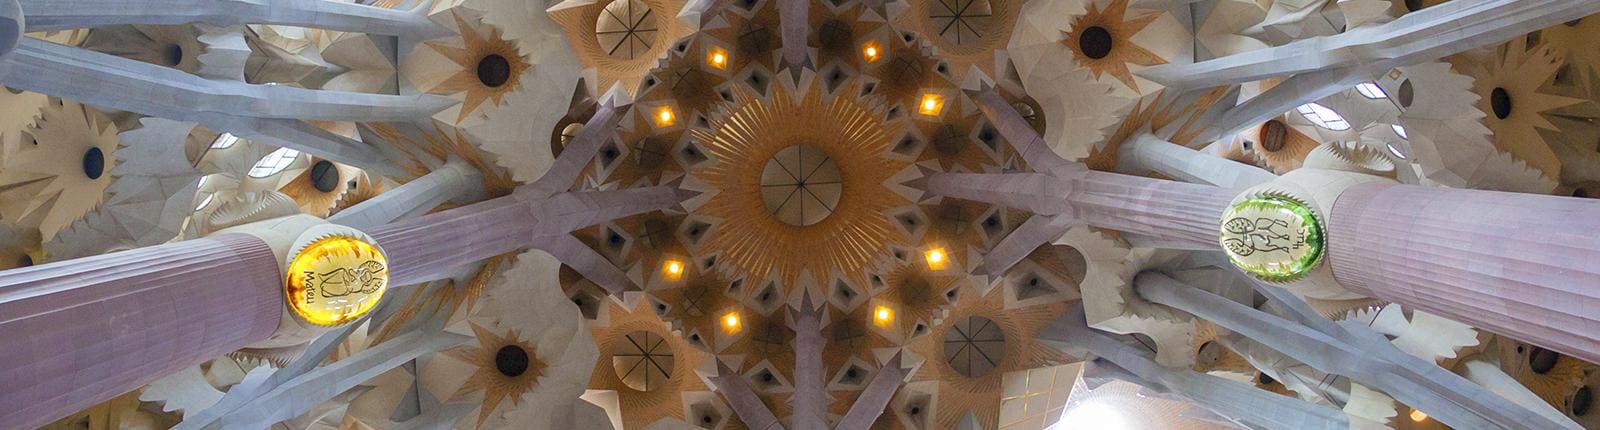 Interior view of the Sagrada Familia ceiling in Barcelona, Spain